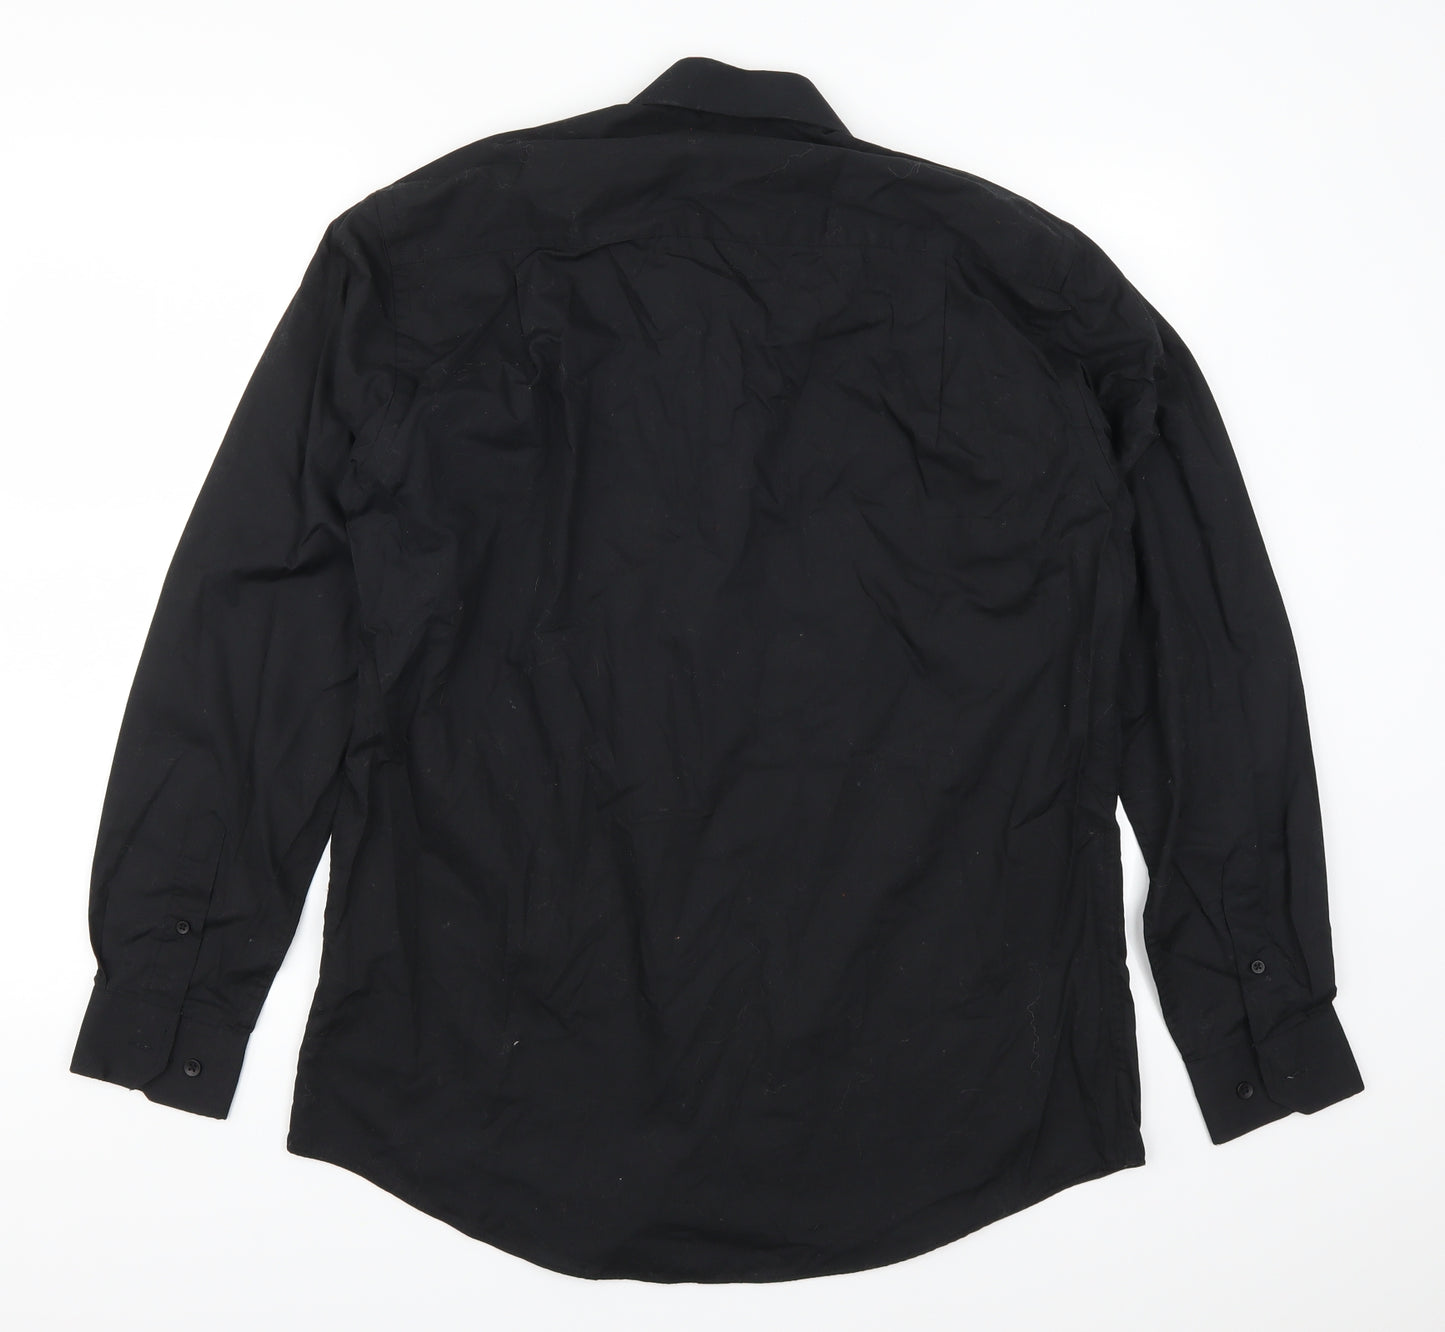 Cedarwood State Mens Black    Dress Shirt Size 15.5